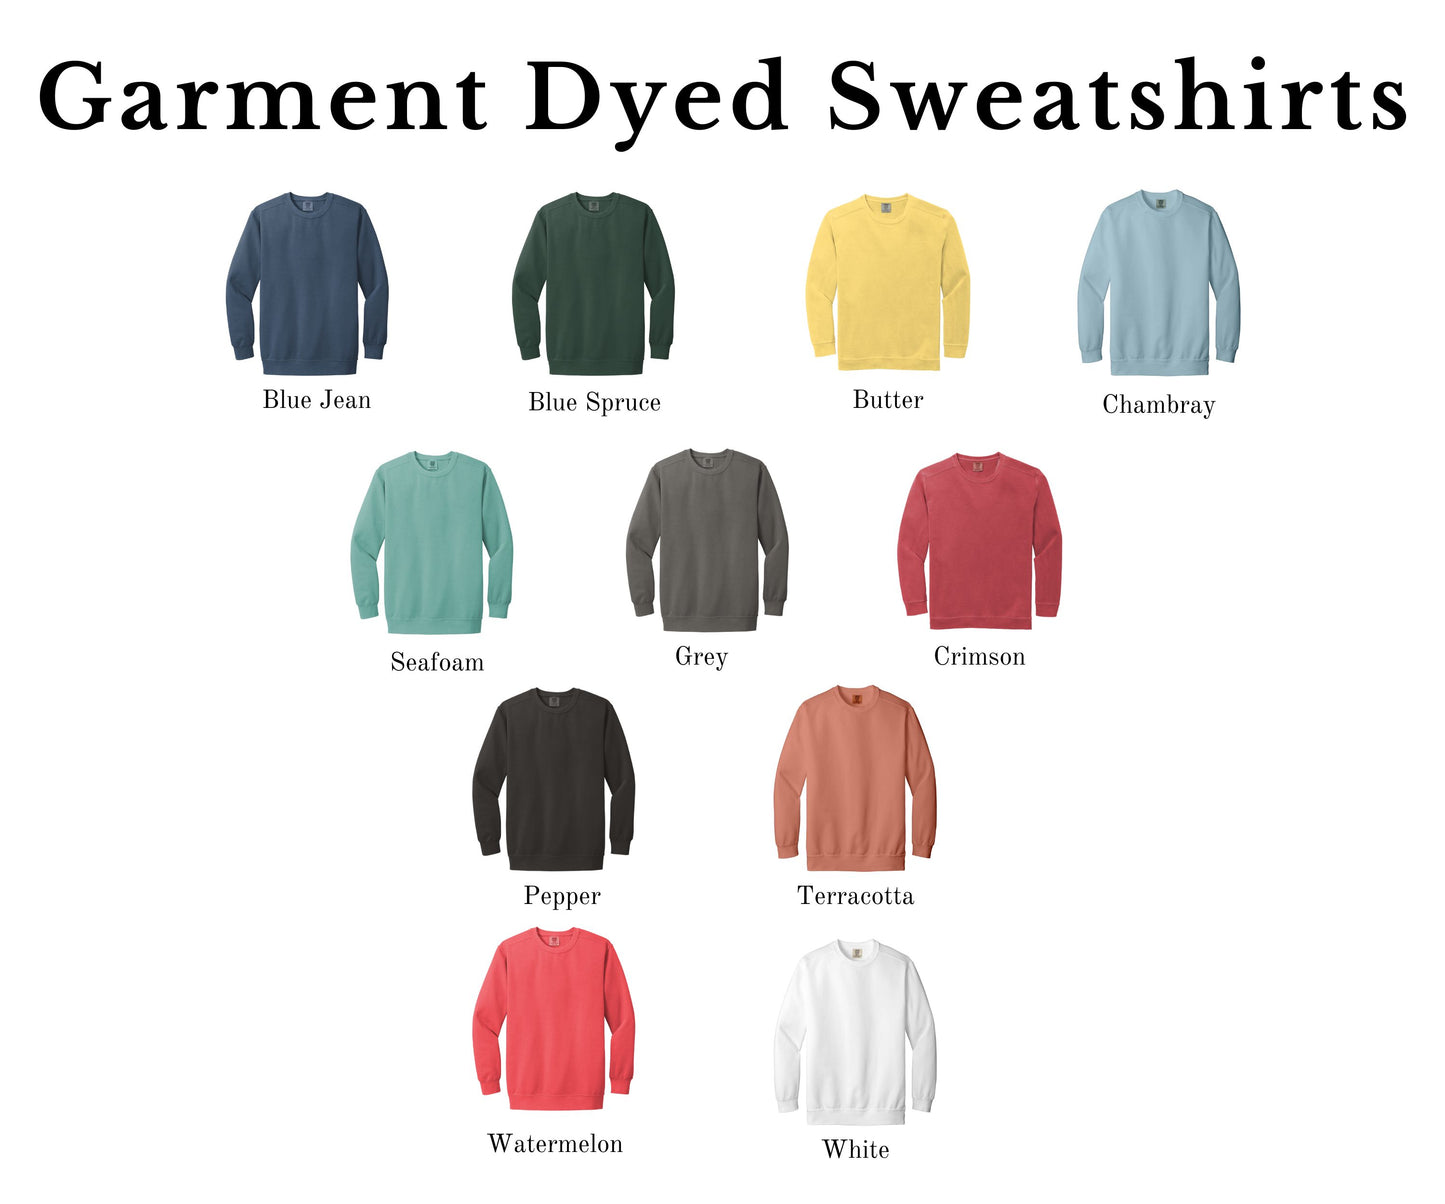 My Reading Sweatshirt | Garment Dyed Sweatshirt